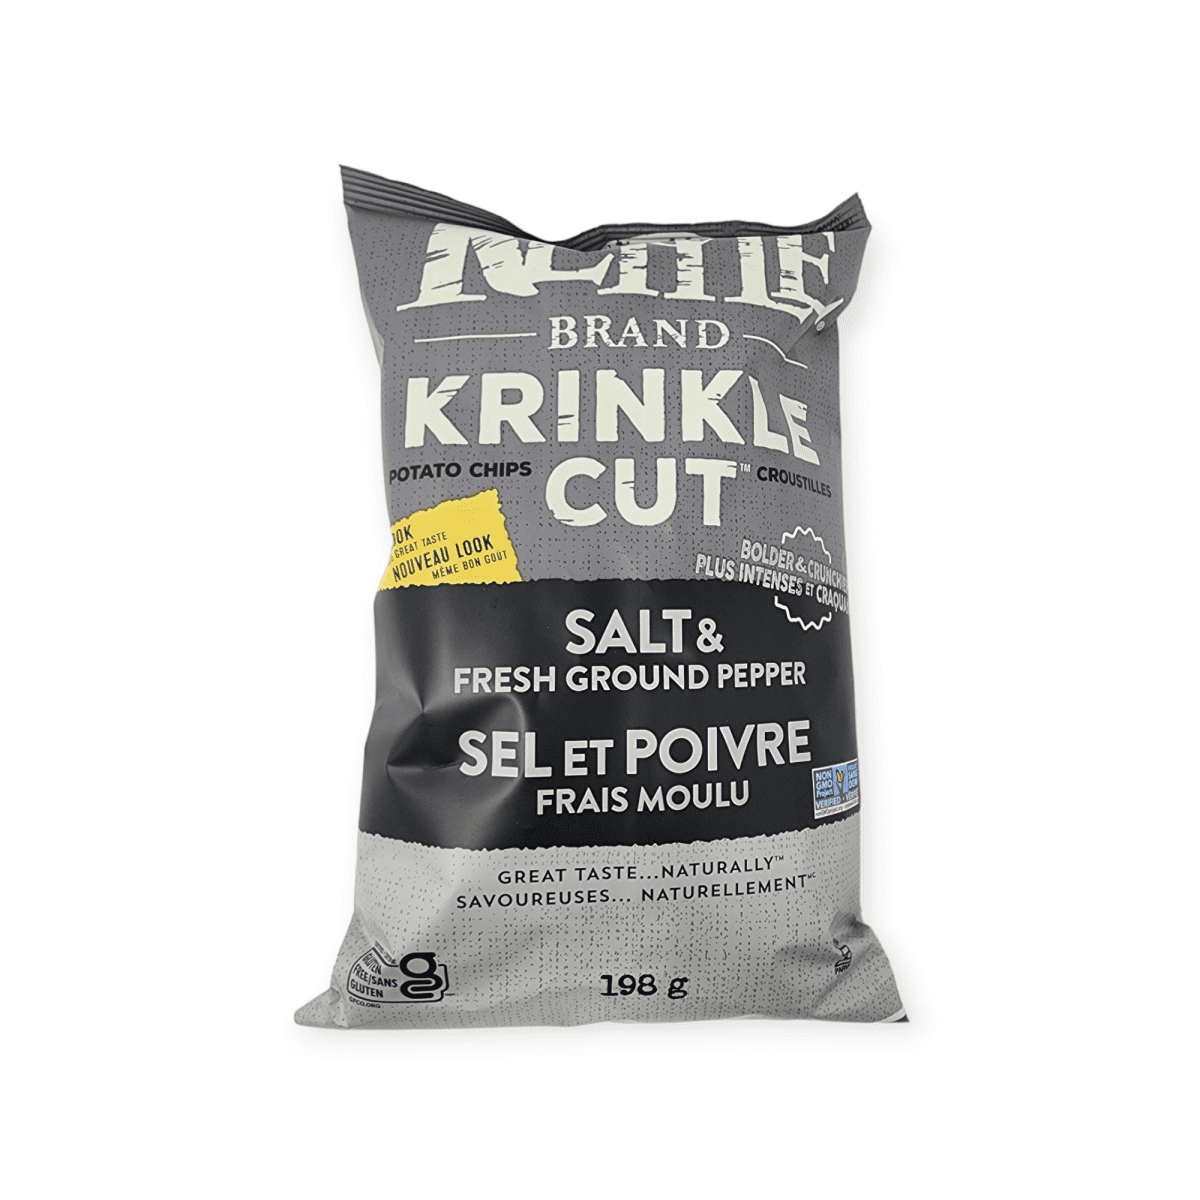 Kettle Brand Krinkle Cut Salt & Fresh Ground Pepper (198g)